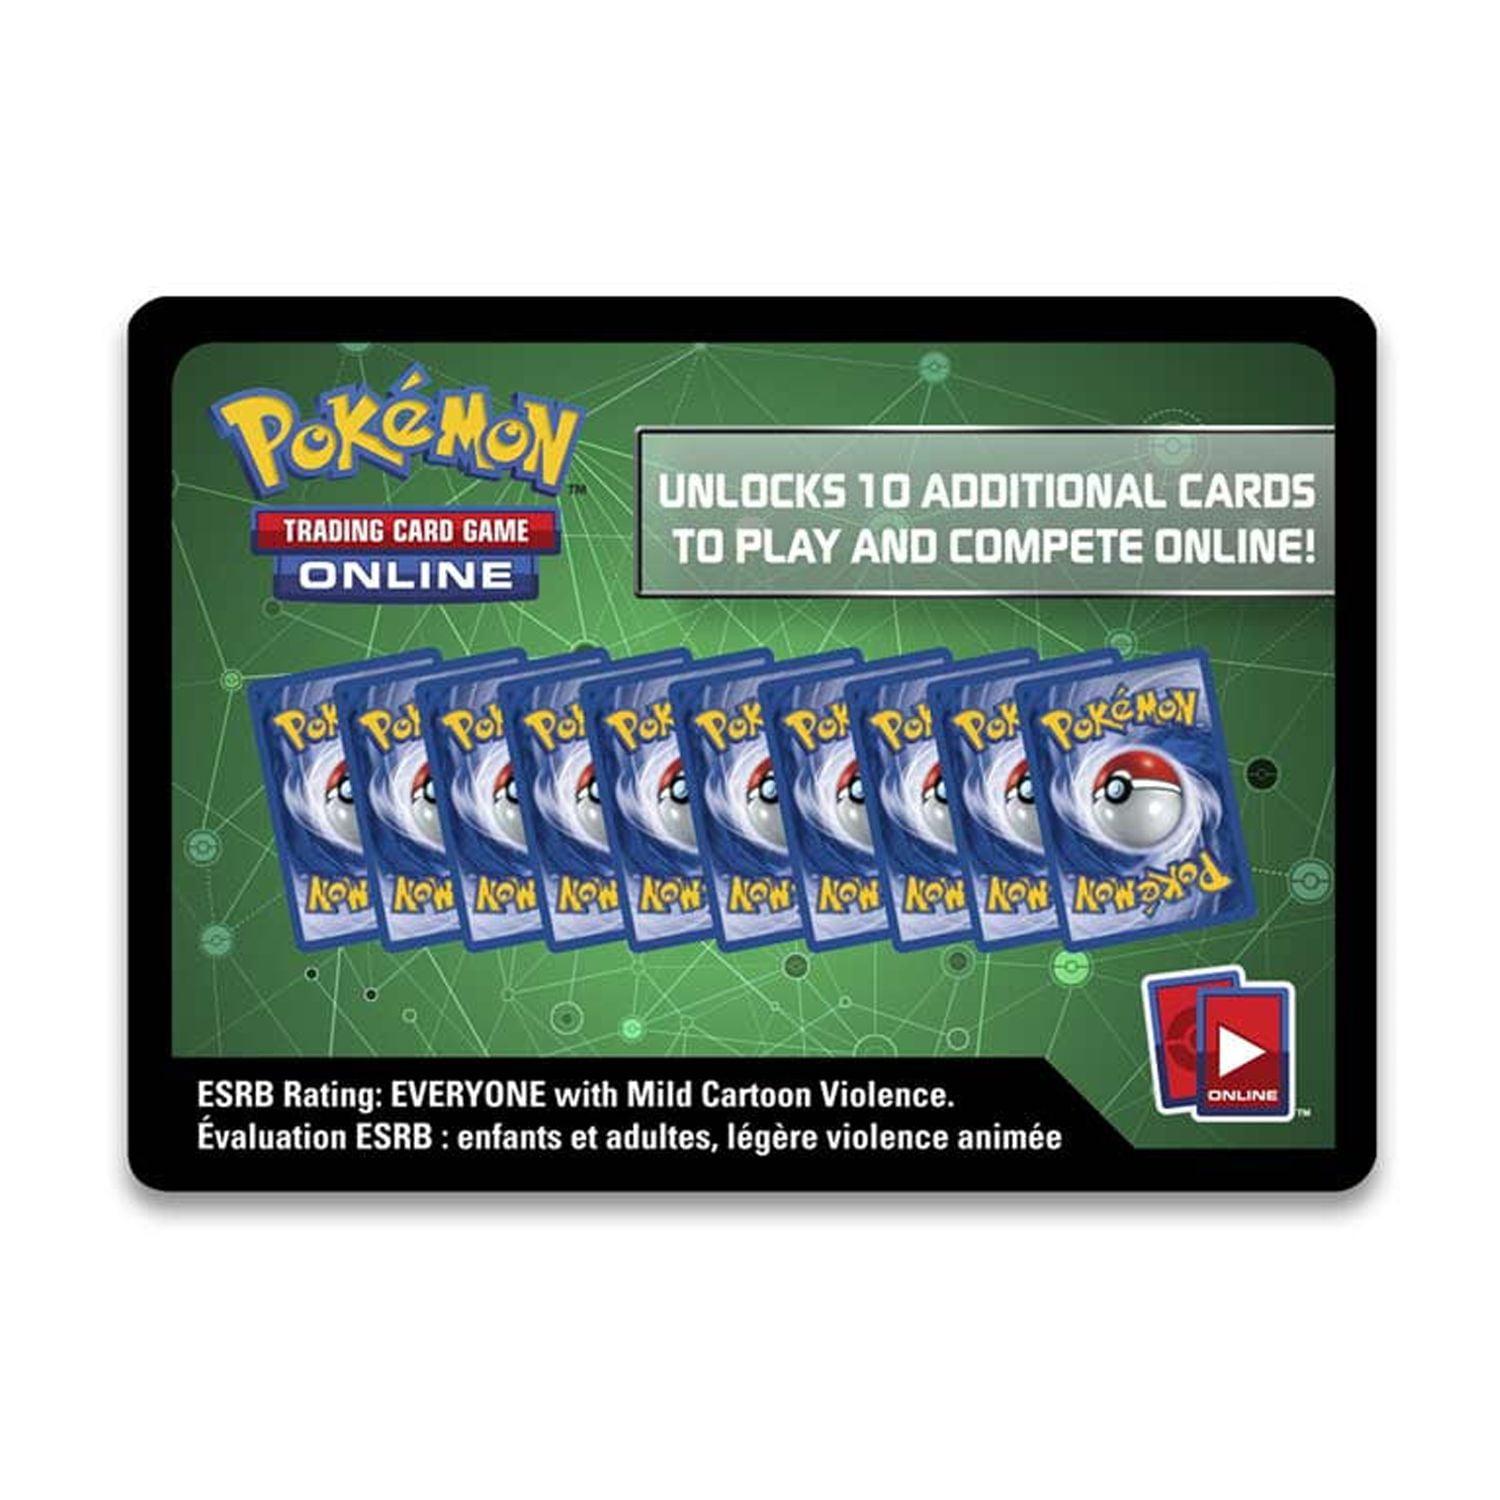 Best Buy: Pokémon Trading Card Game: Pikachu V Box 290-87117